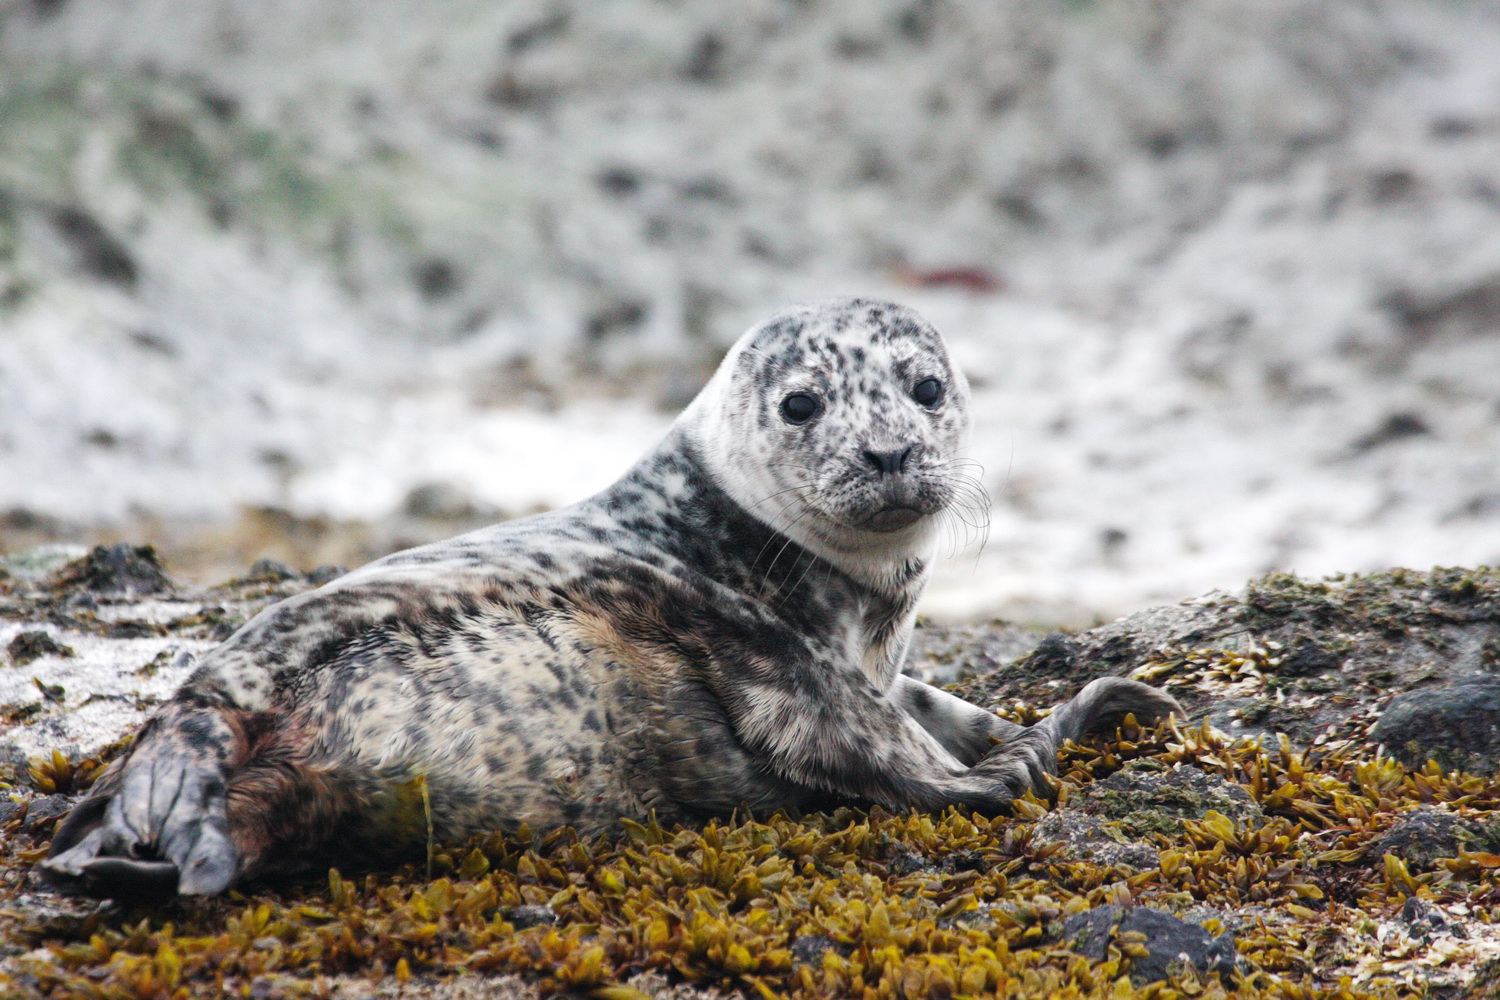 A new born harbor seal pup. Photo by Evgeny Mamaev